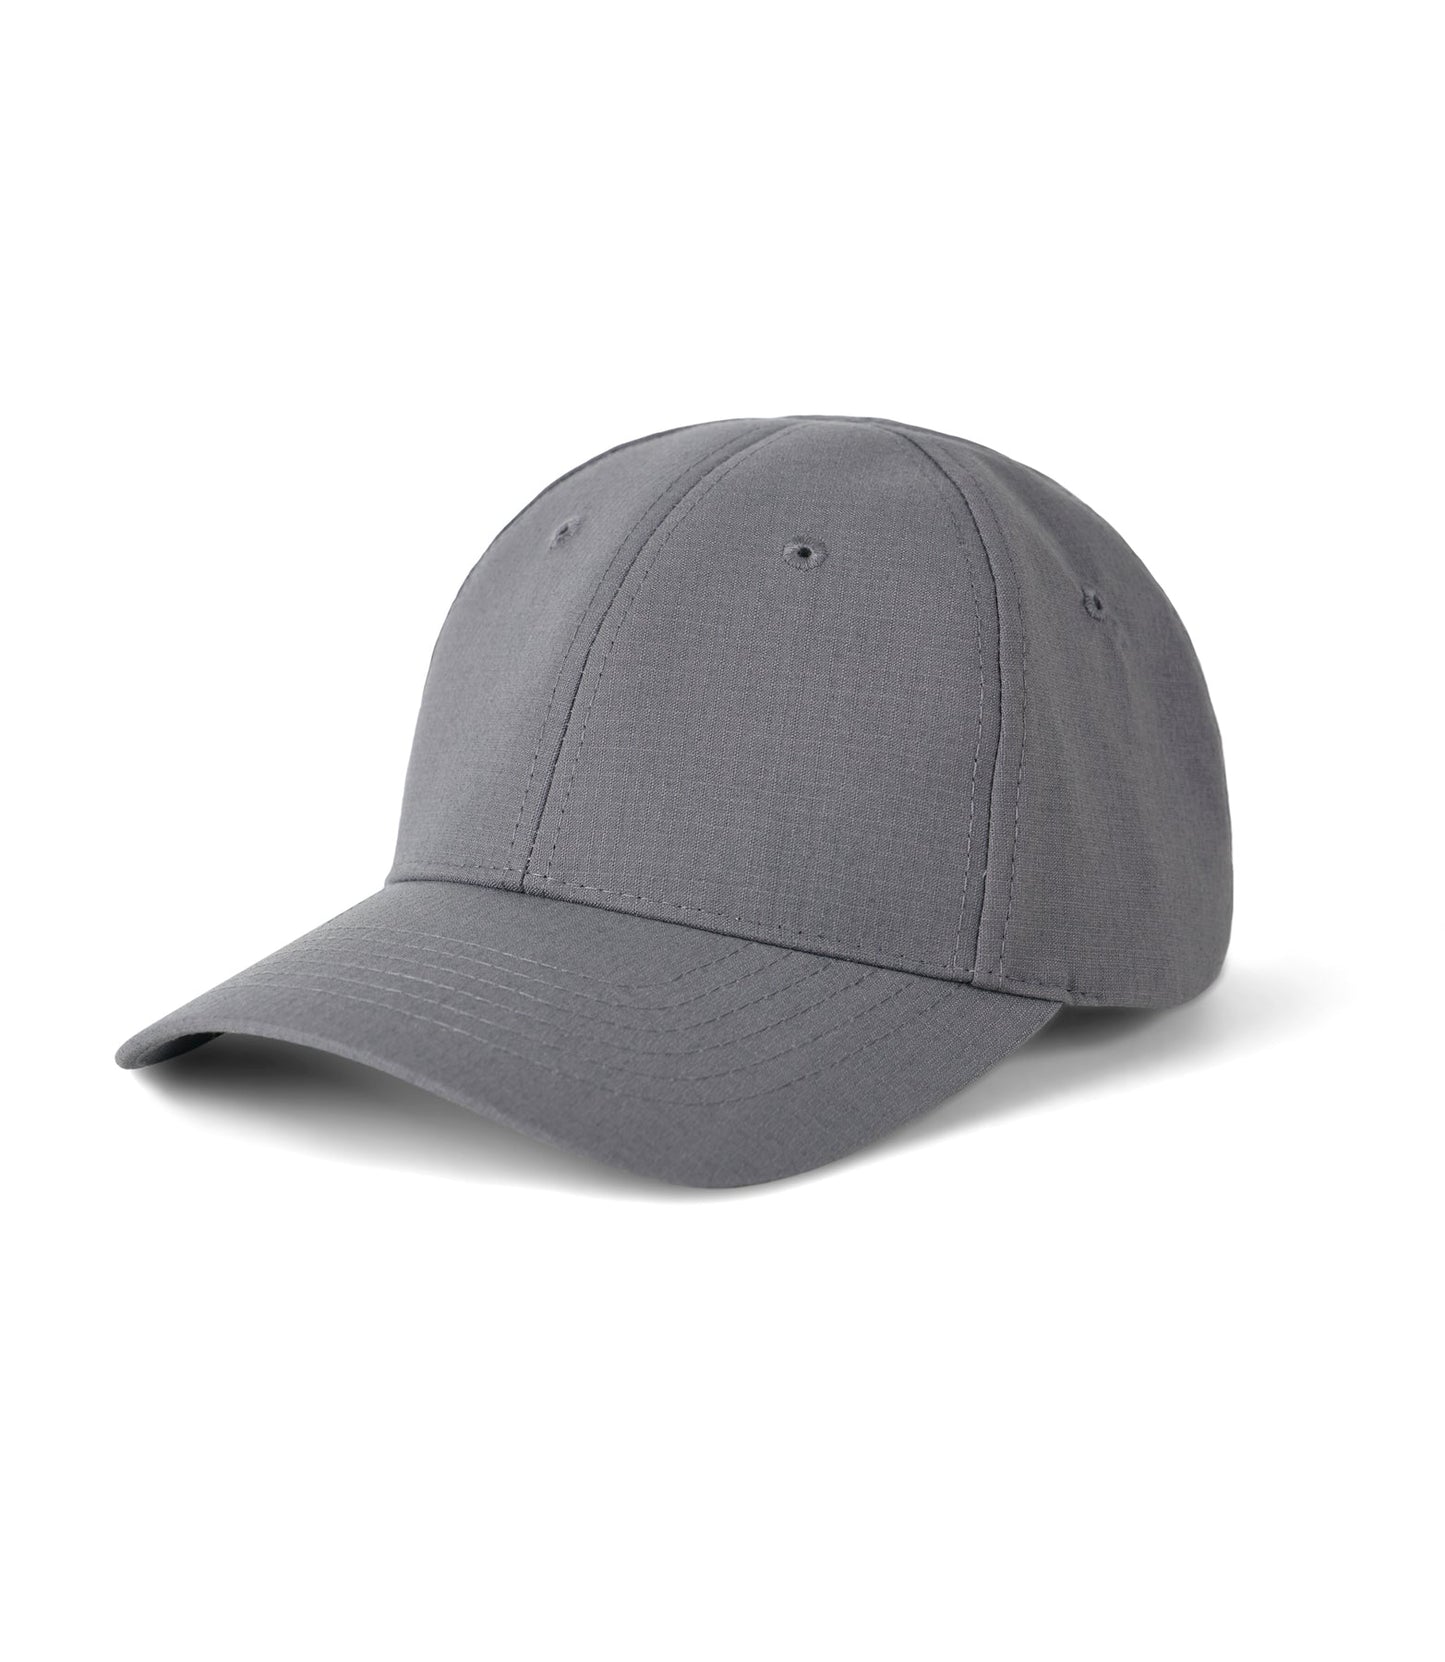 Adjustable Blank Uniform Ballcap